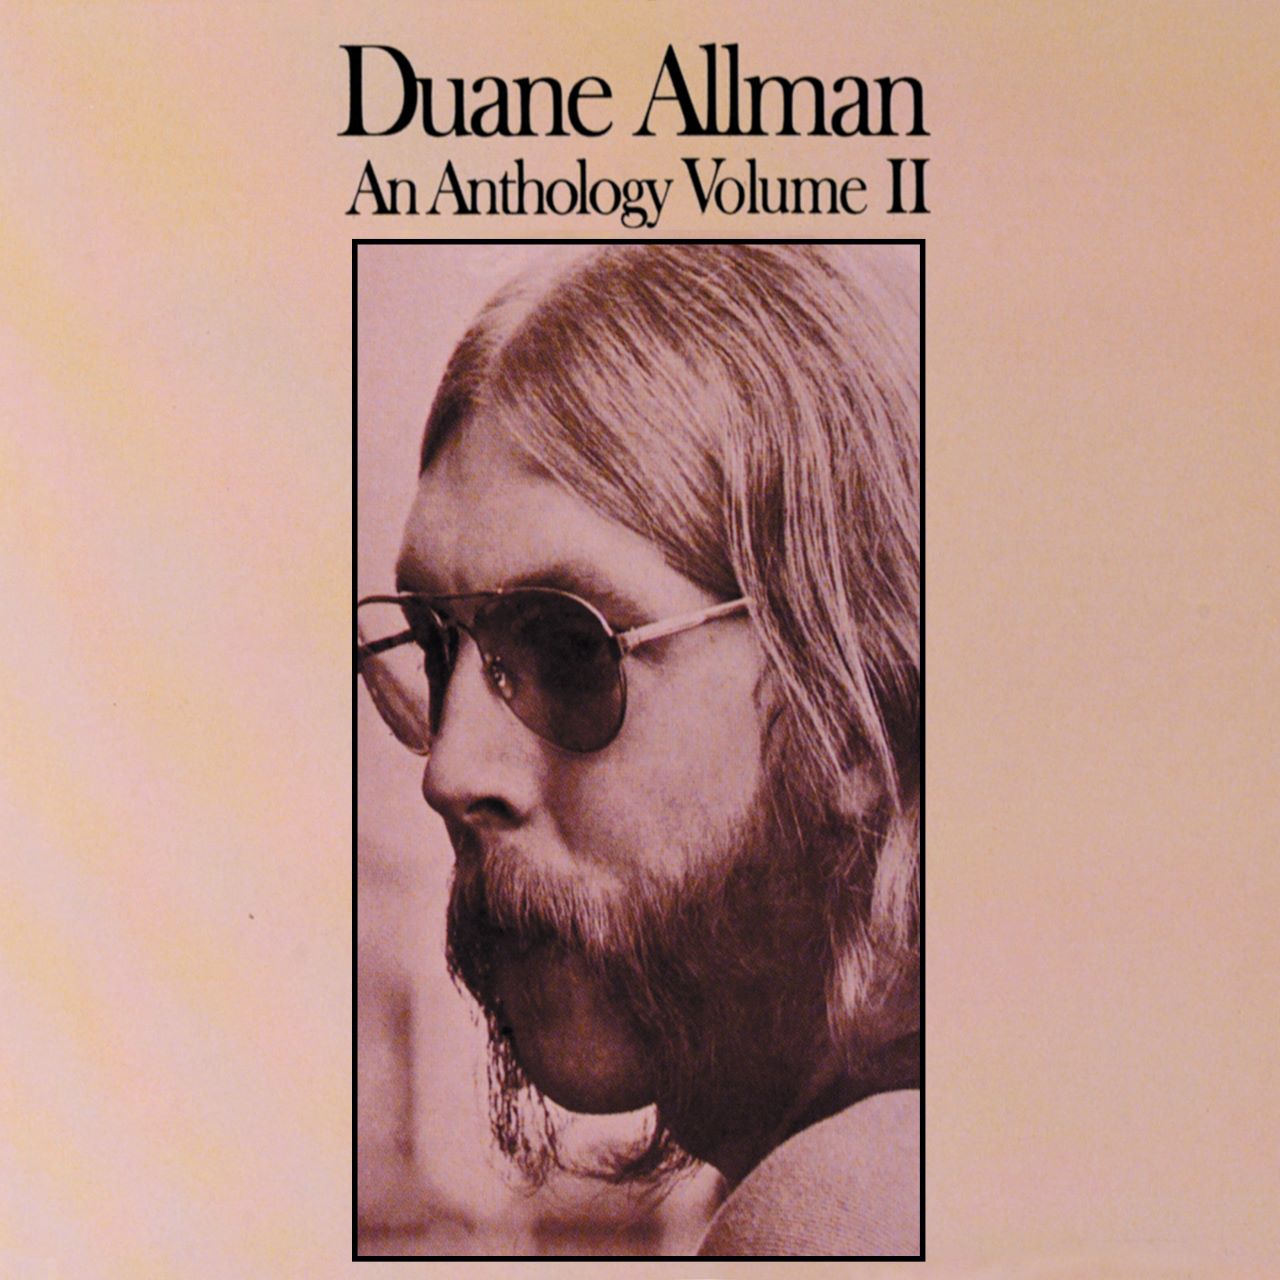 Duane Allman - An Anthology Volume II cover album